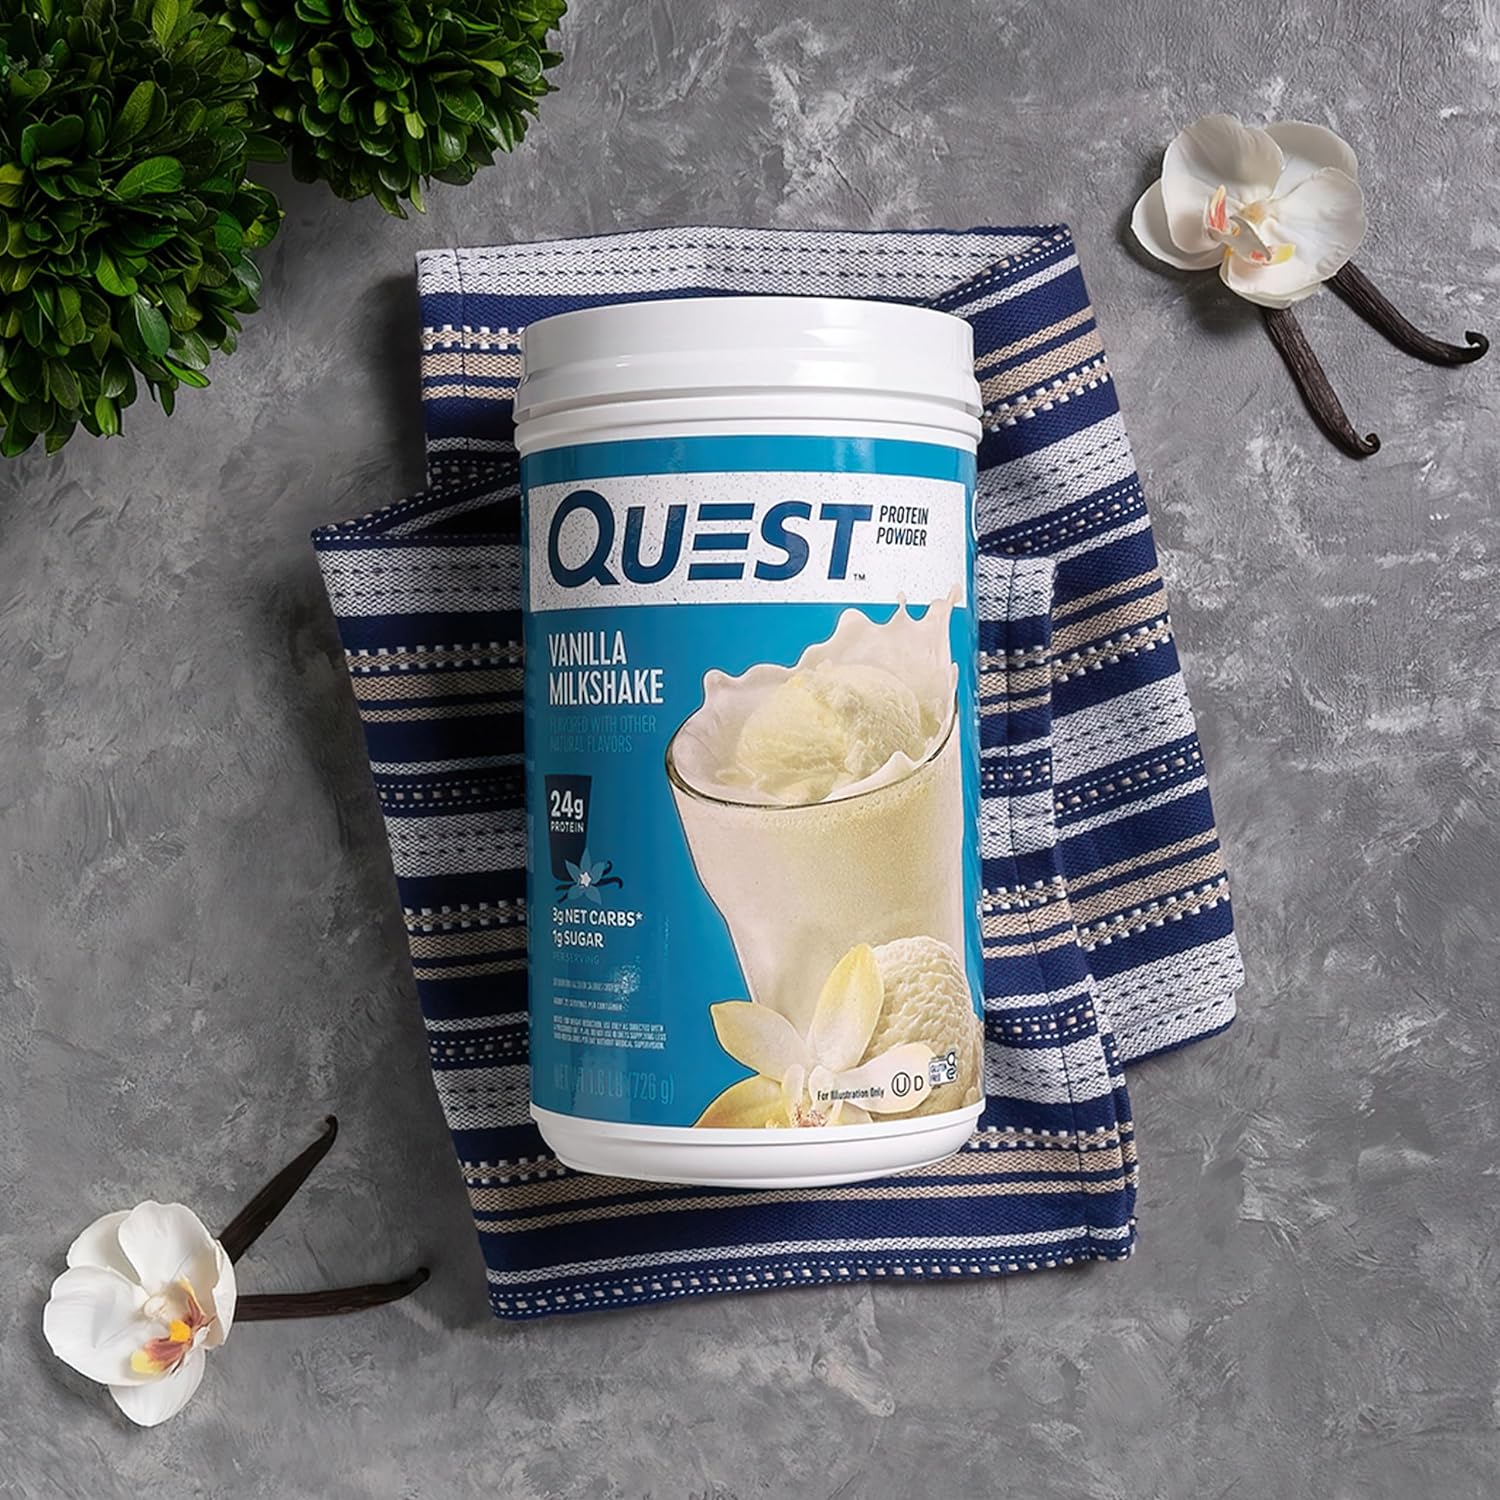 Quest Nutrition Vanilla Milkshake Protein Powder, 24g of Protein, 1g of Sugar, Low Carb, Gluten Free, 1.6 Pound, 23 servings : Everything Else